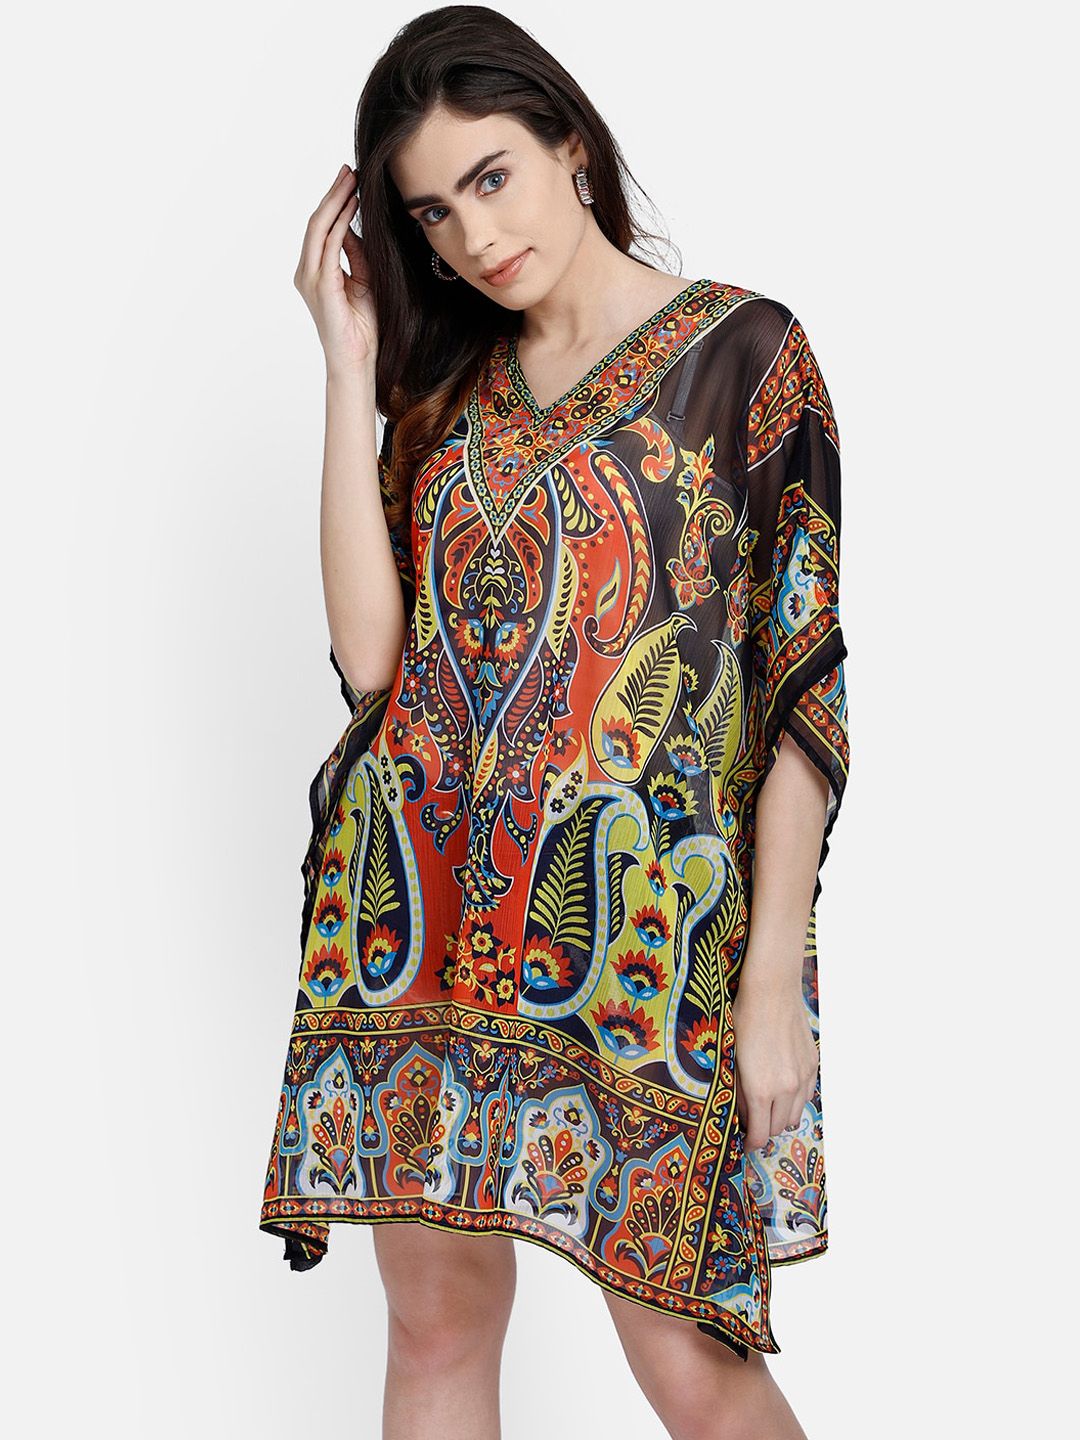 Aditi Wasan Multicolor Paisley Print Kaftan Dress Price in India